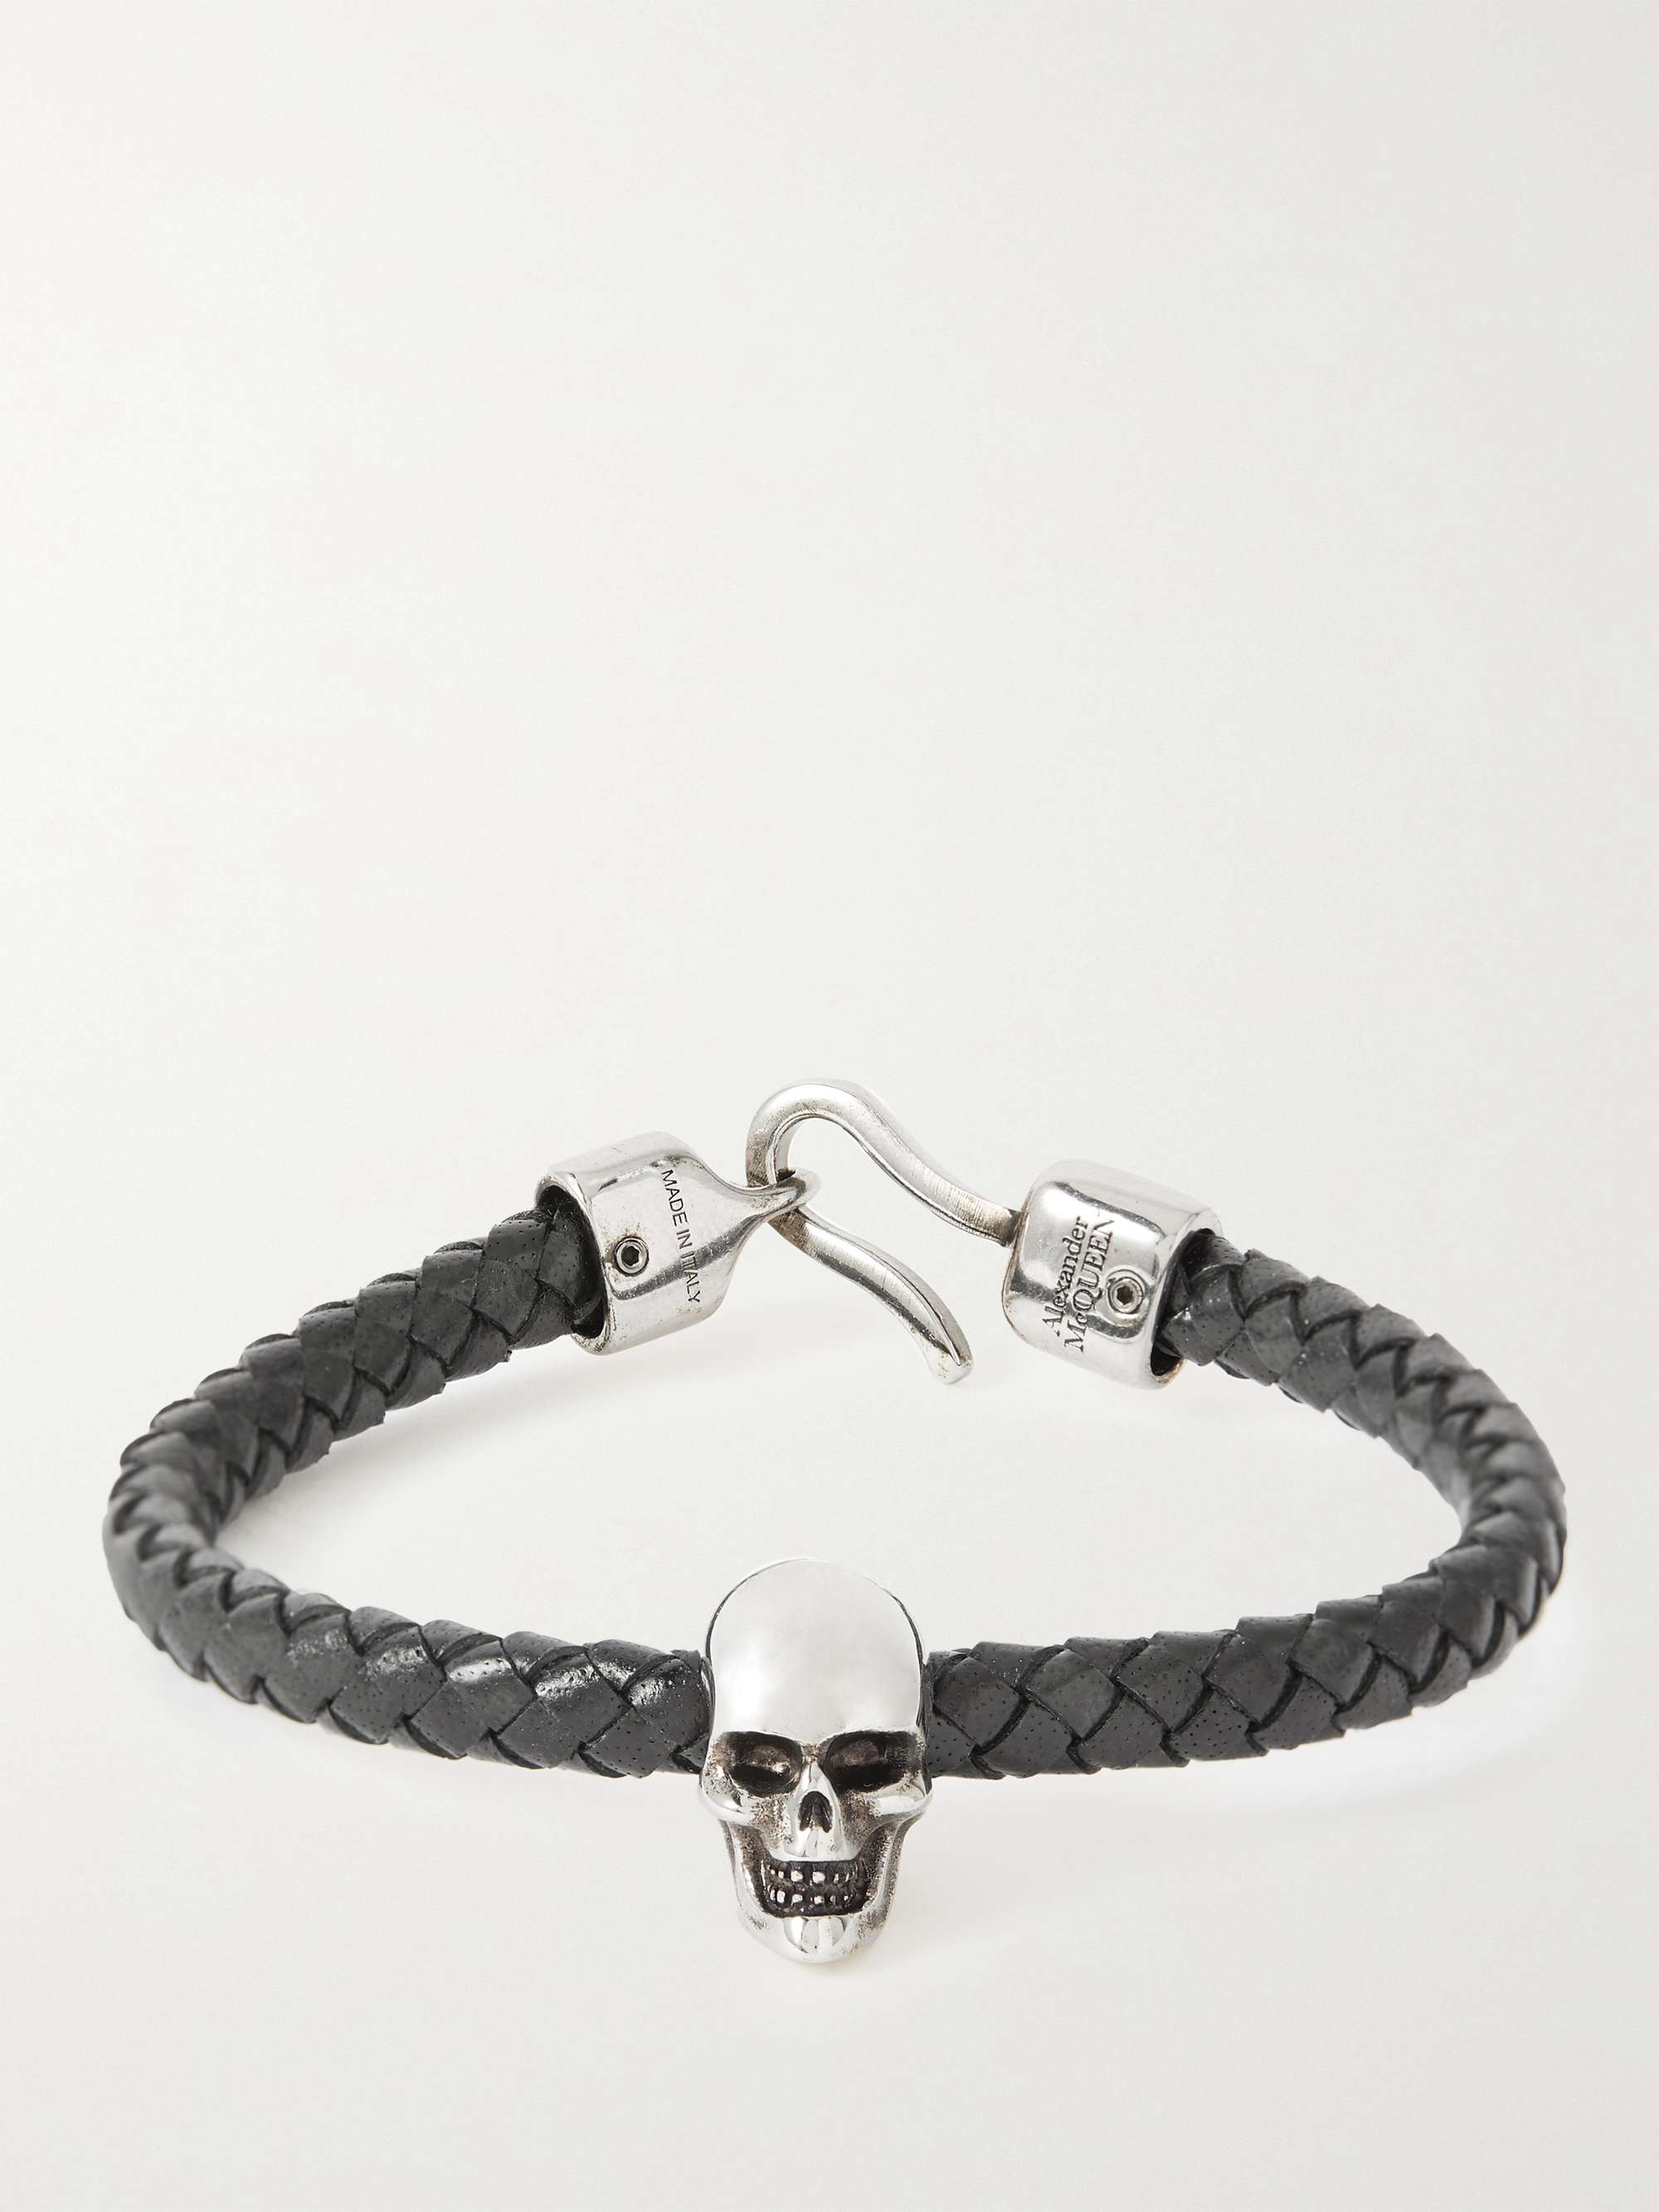 systeem Alternatief adviseren ALEXANDER MCQUEEN Skull Woven Leather and Silver-Tone Bracelet | MR PORTER